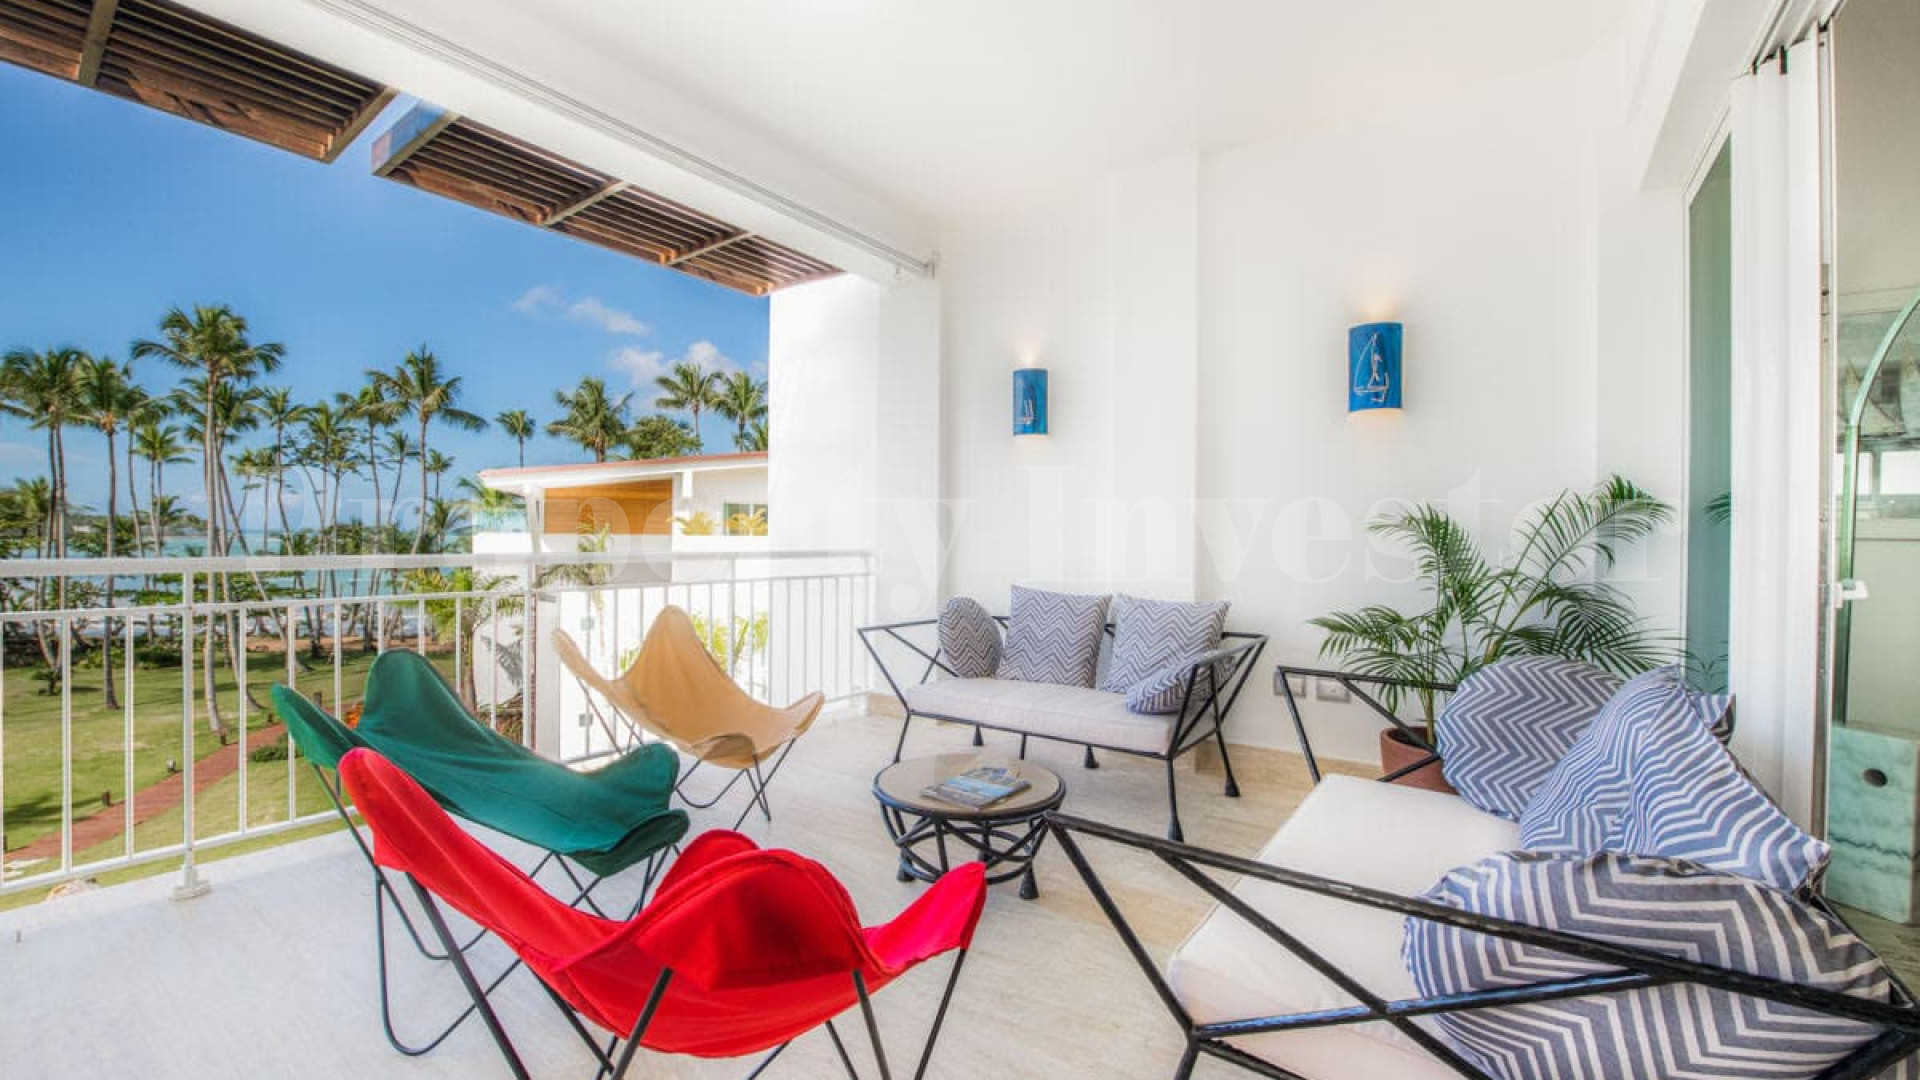 Modern 3 Bedroom Luxury Penthouse with Beautiful Ocean Views for Sale in Playa Bonita, Dominican Republic